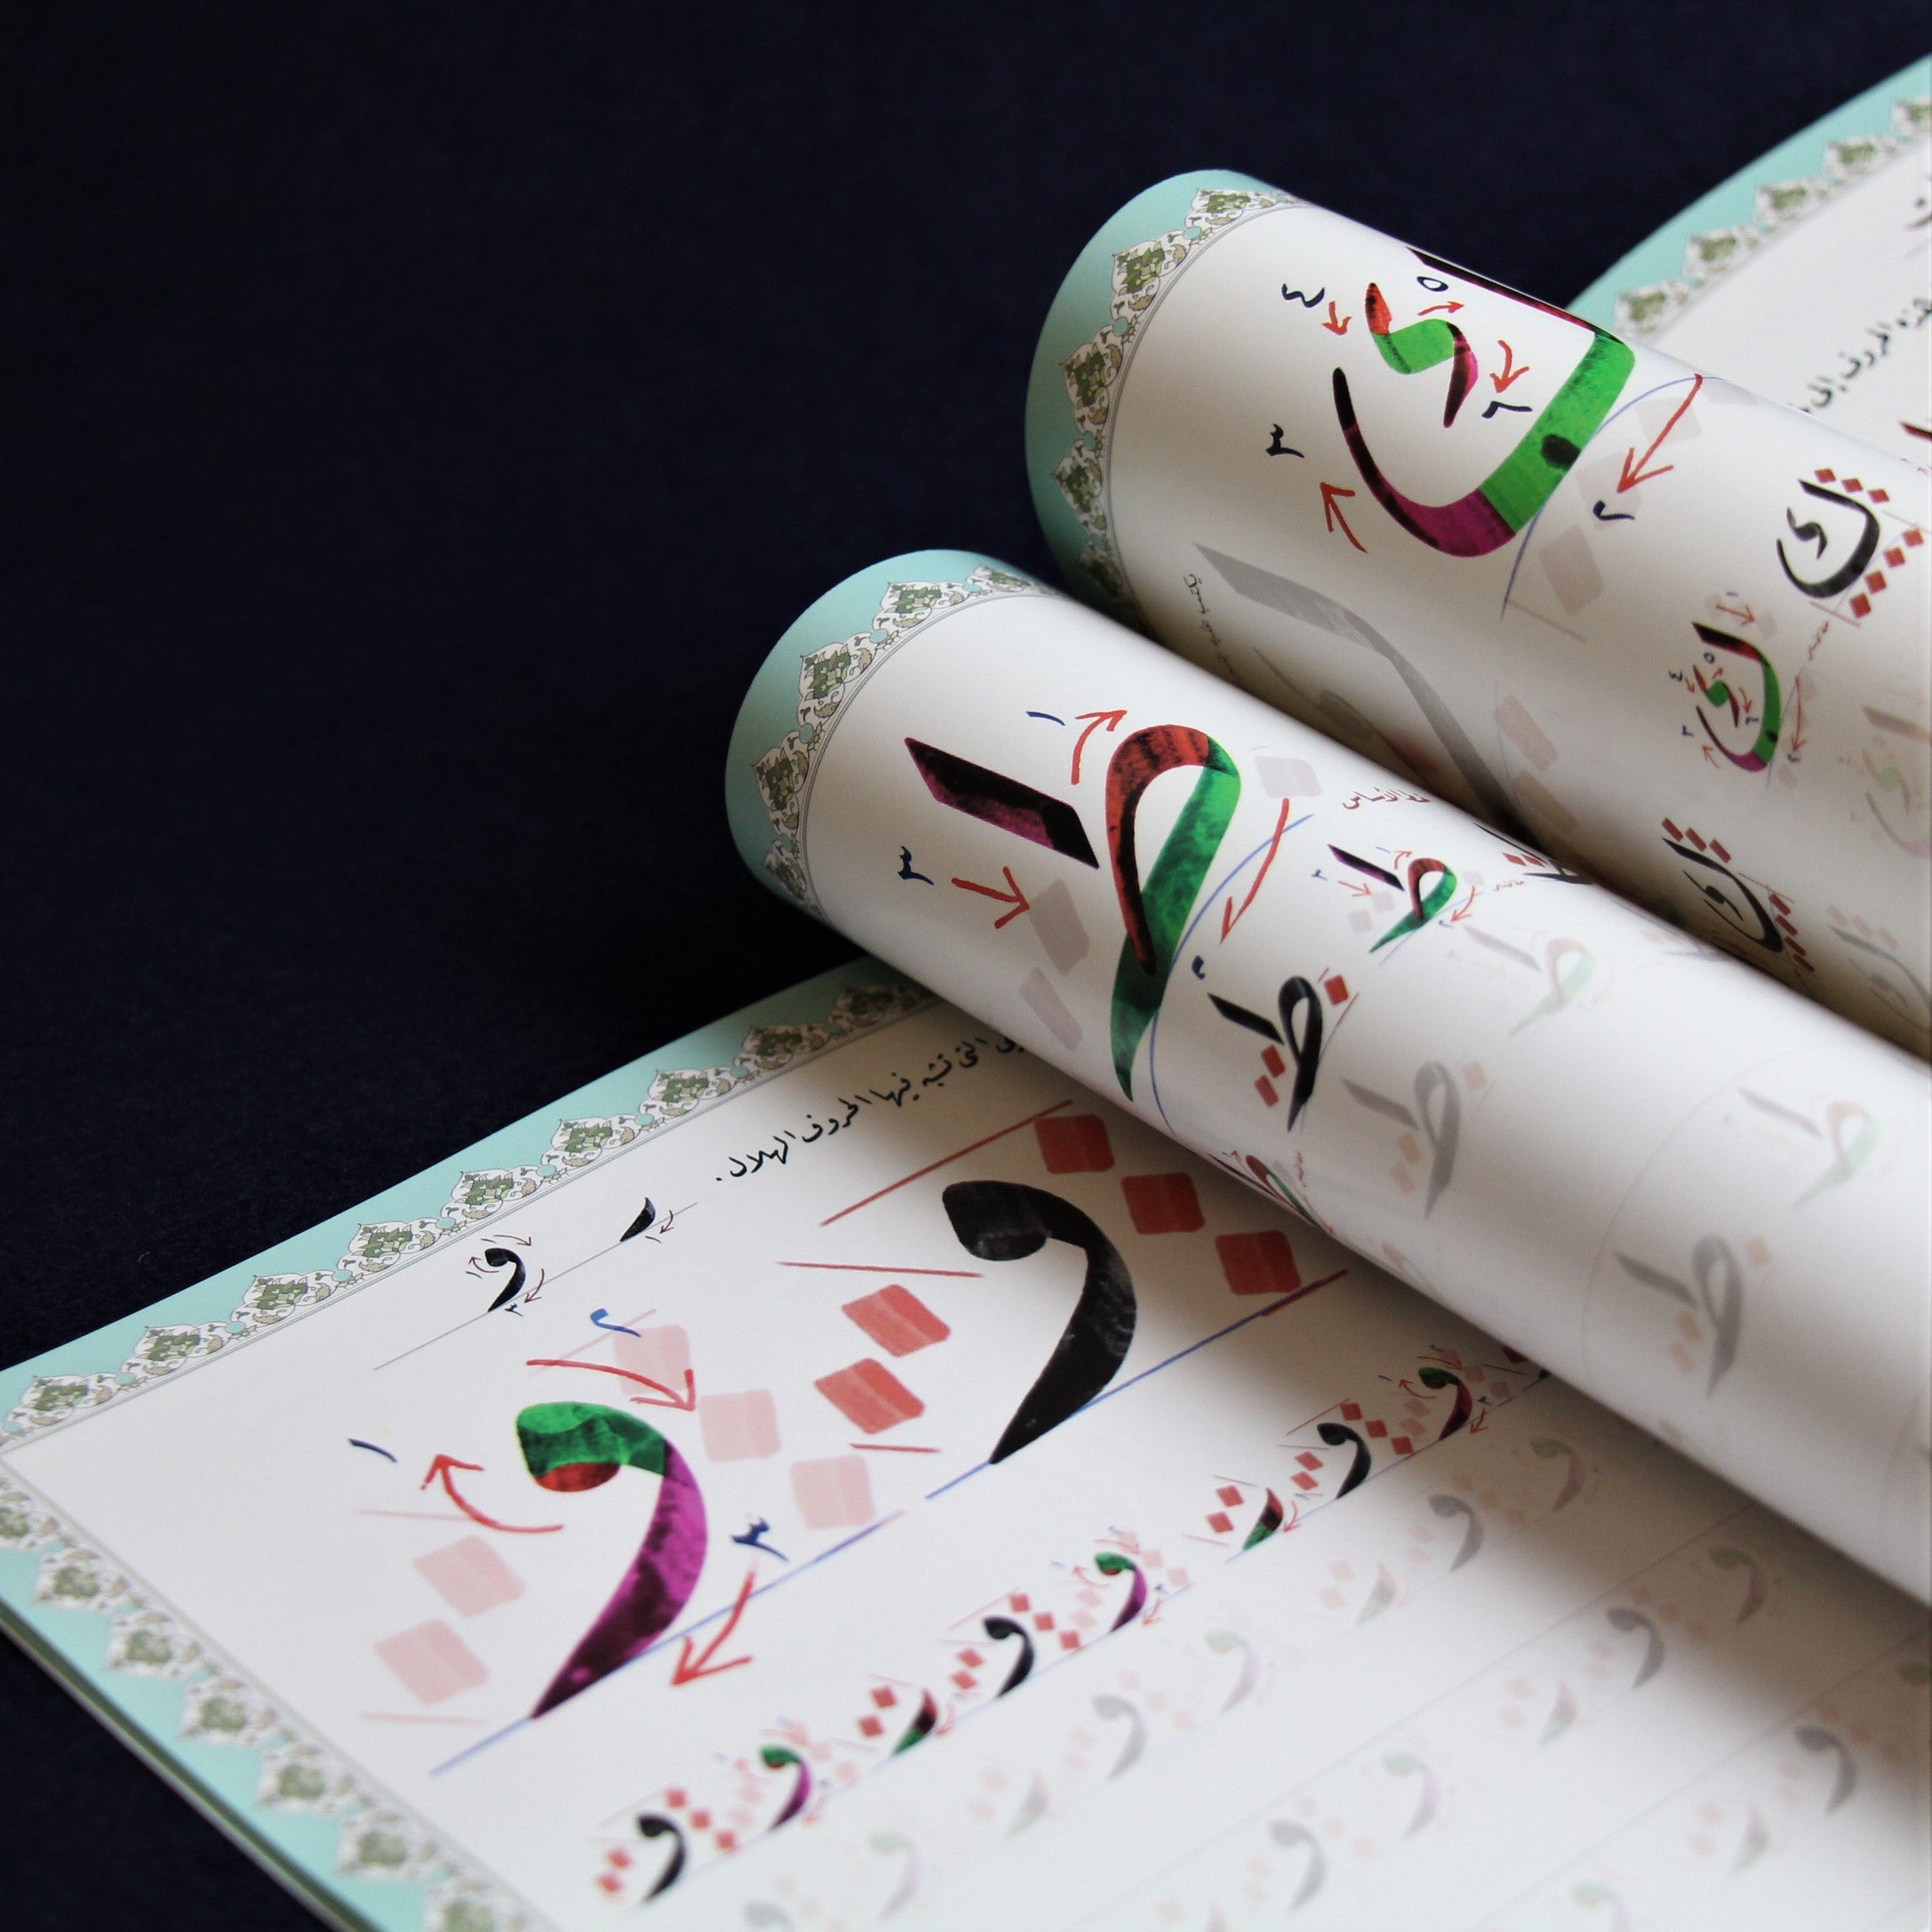 Arabic calligraphy workbook for Ruq'a script - Mukhtar 'Alam